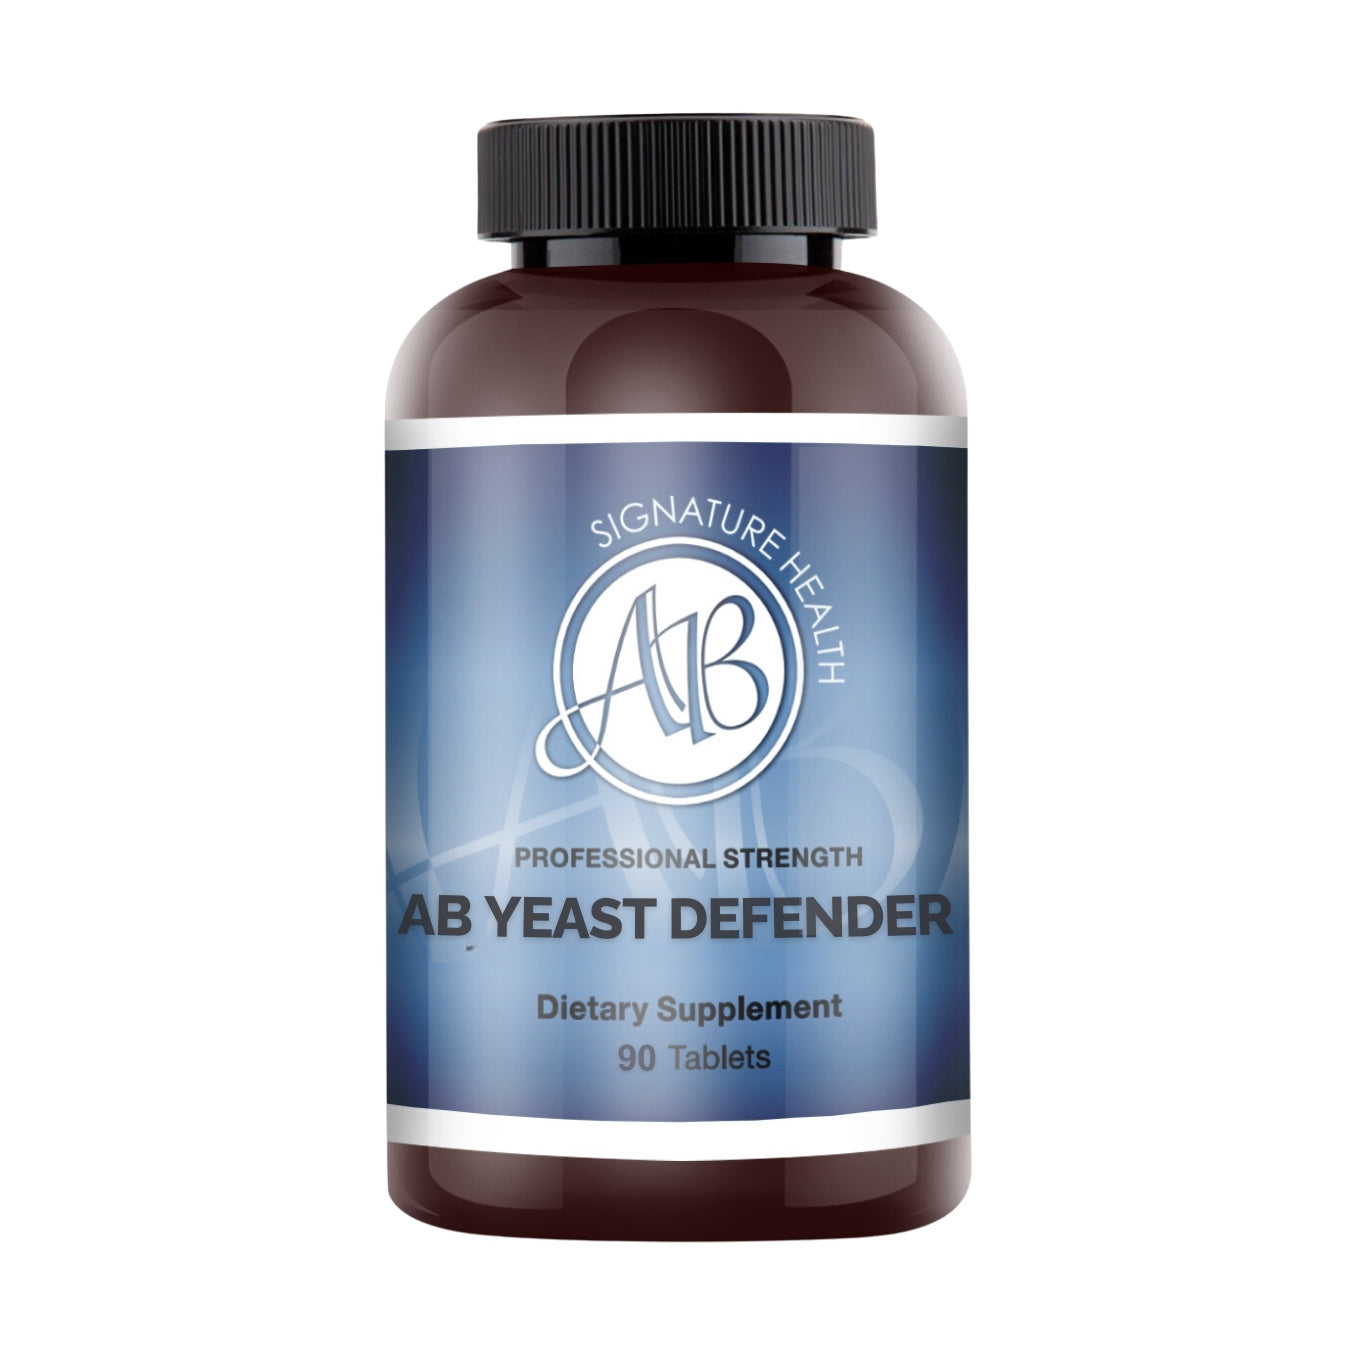 AB Yeast Defender